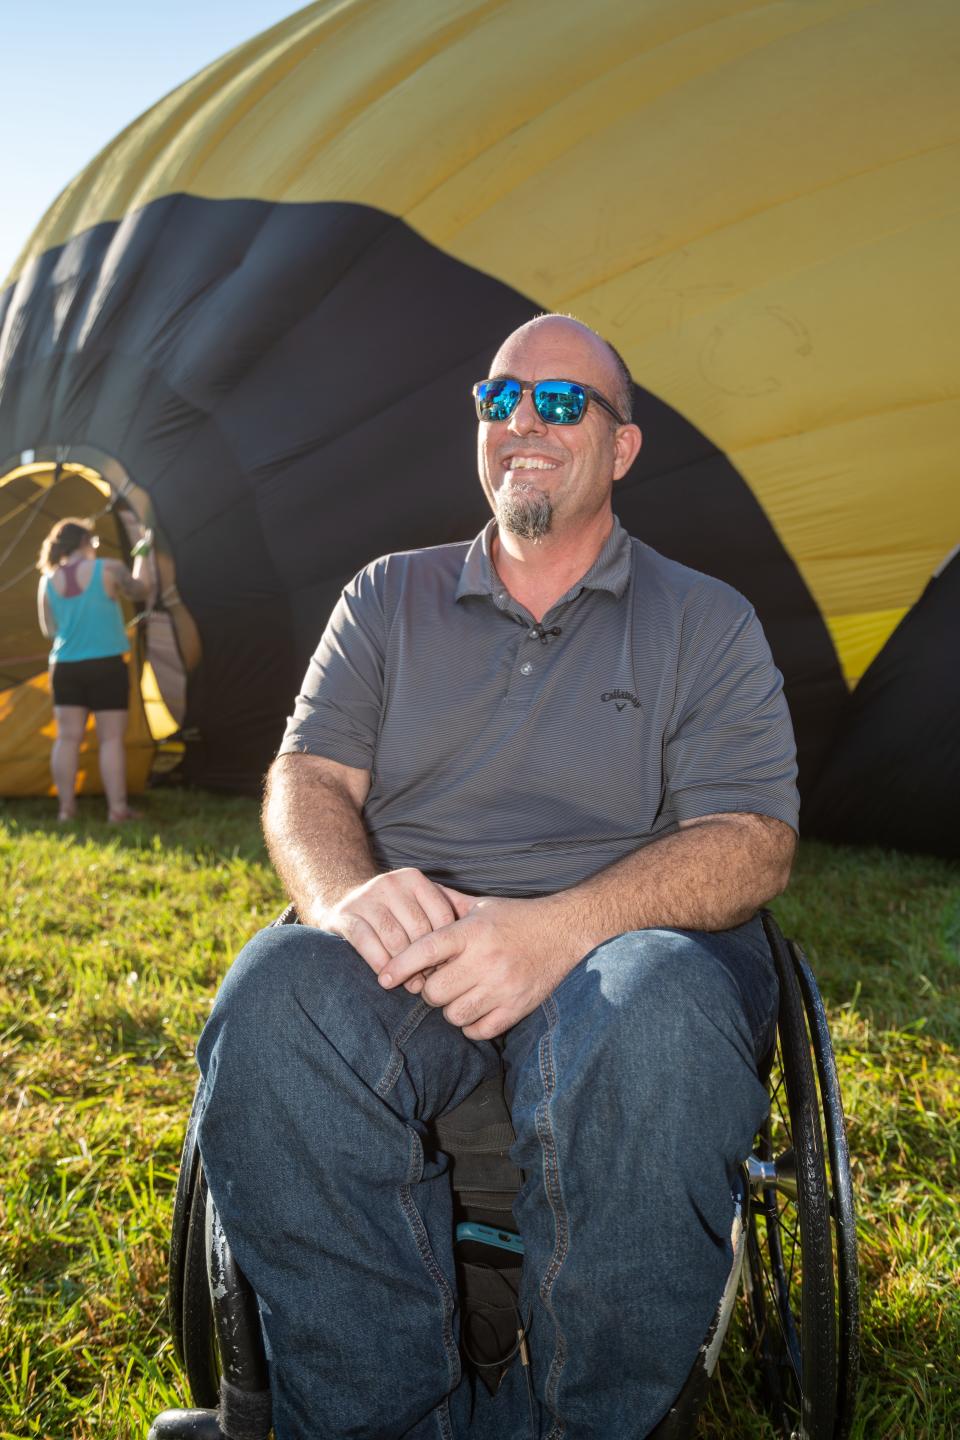 Michael Glen, of Arizona, a paraplegic balloon pilot, at the 40th annual festival of ballooning at Solberg Airport in Readington.